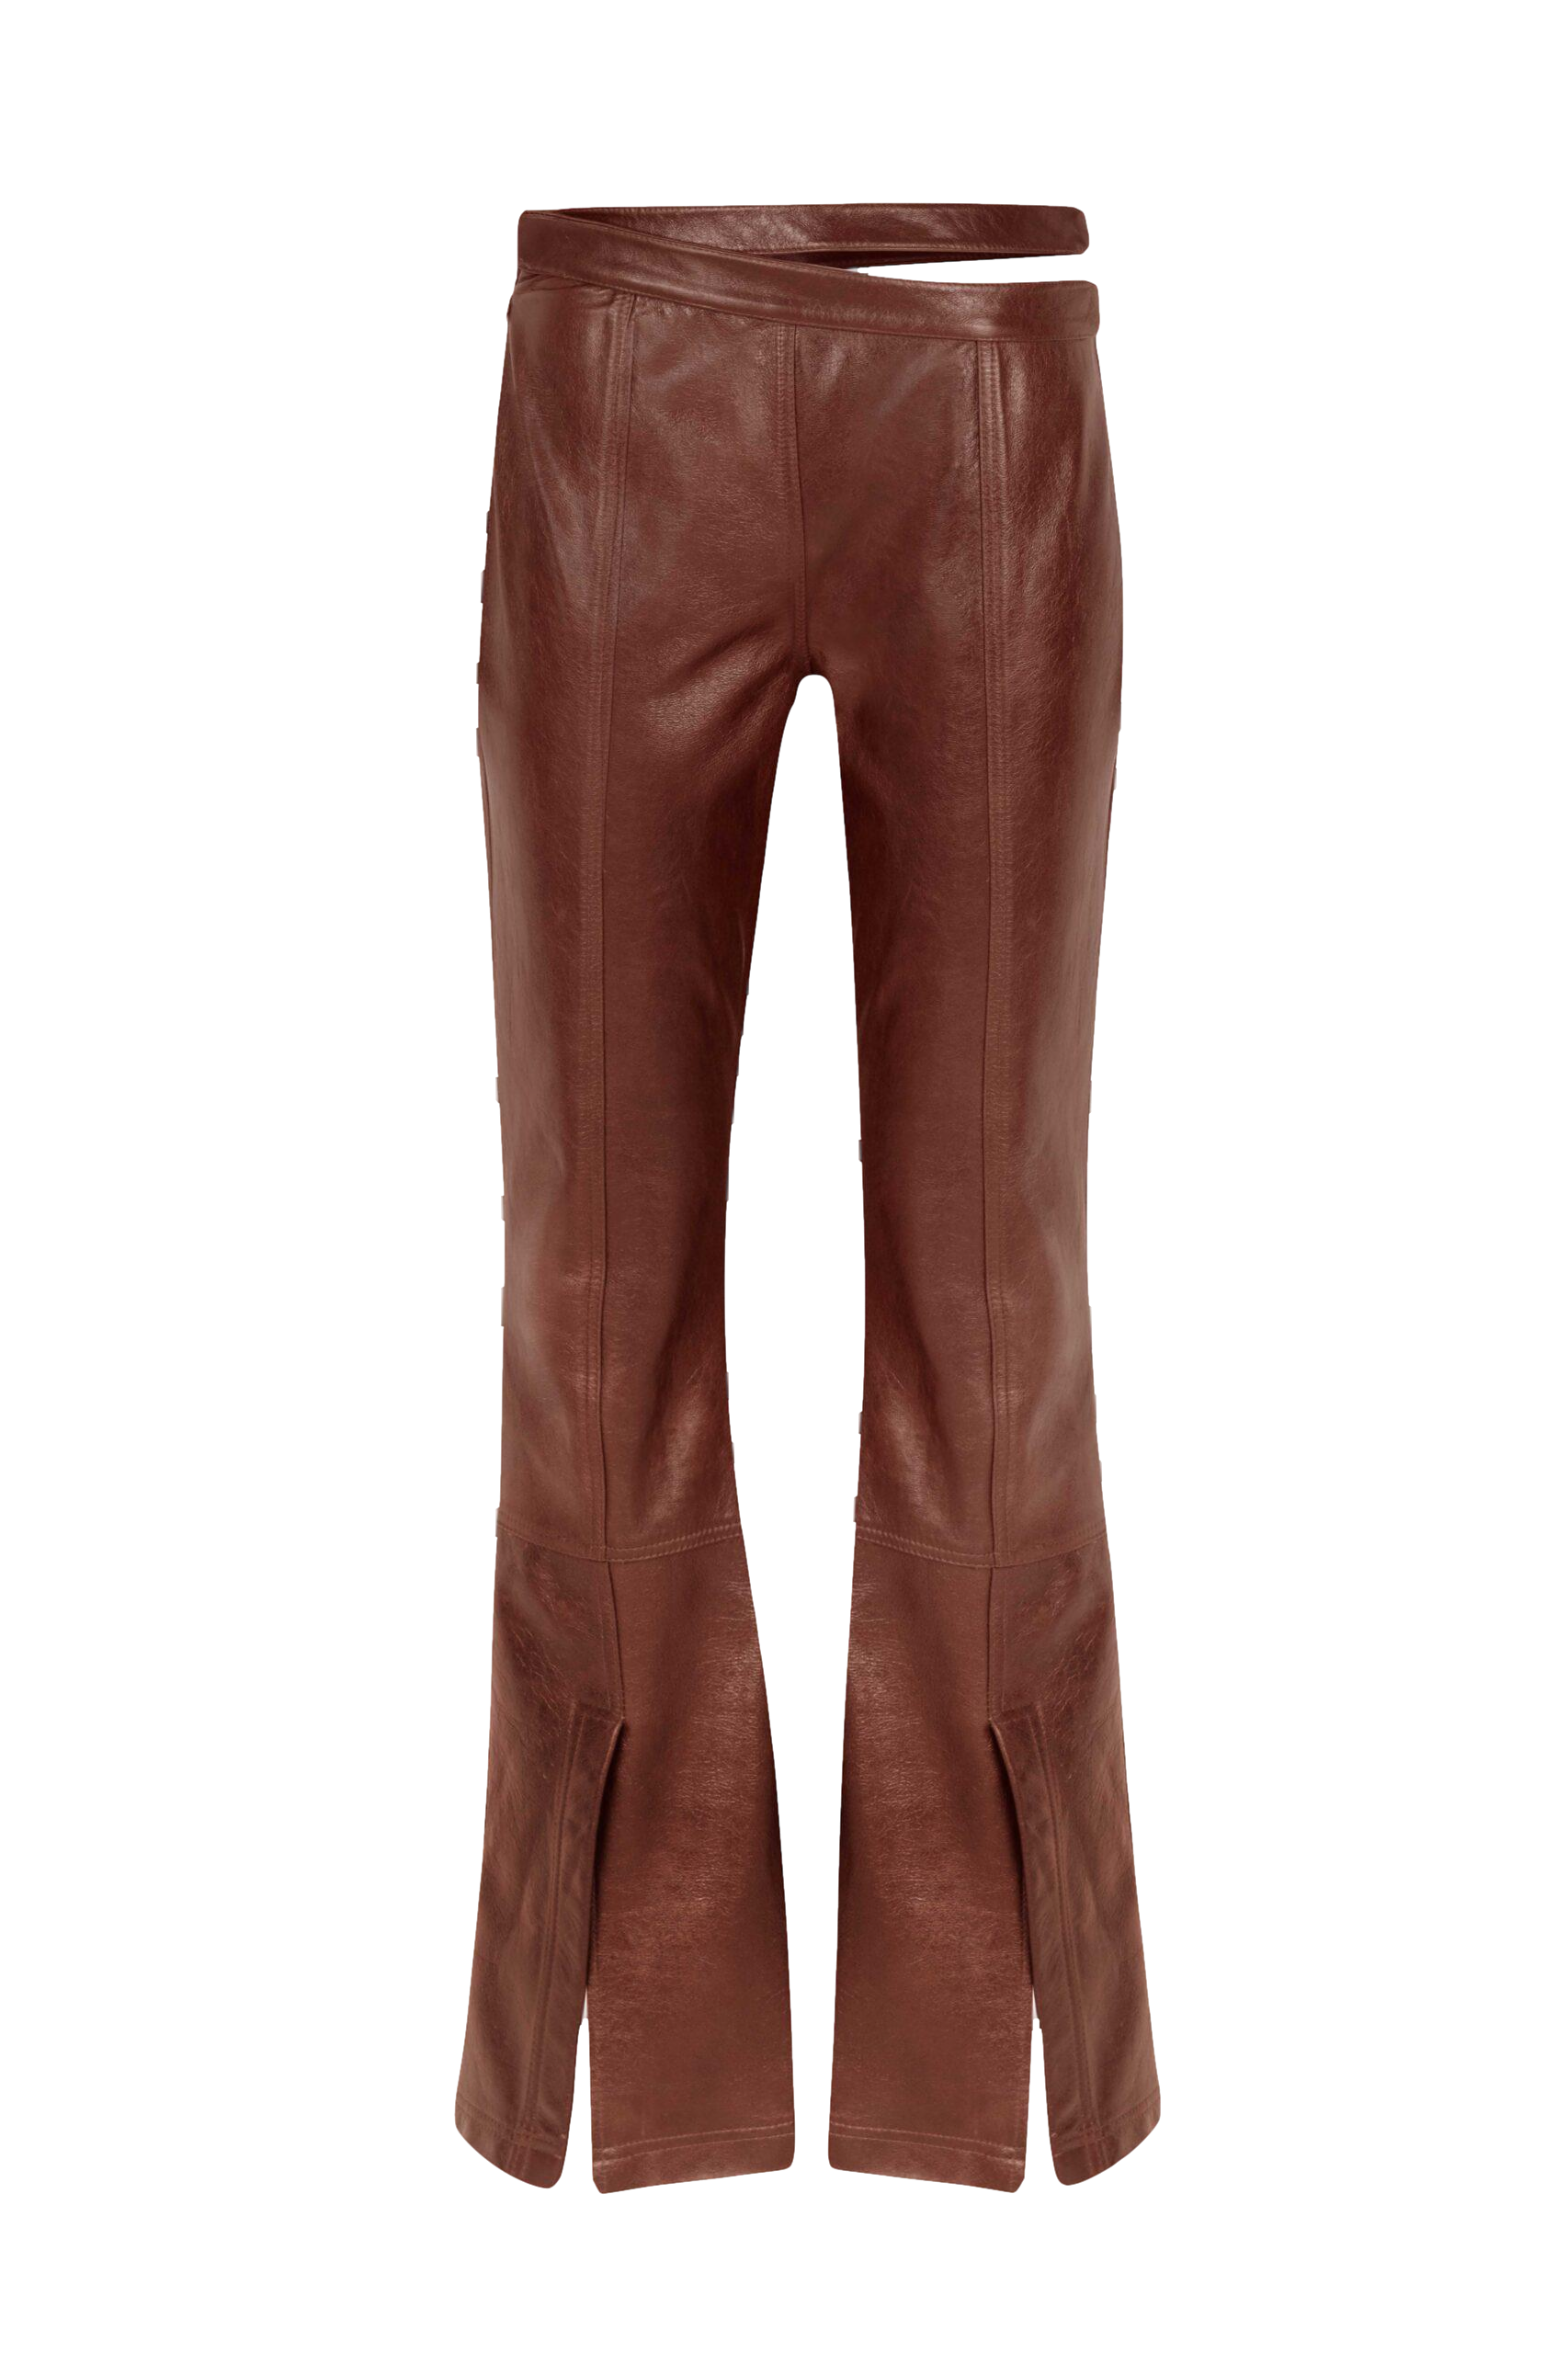 F.ilkk Brown Leather Pants